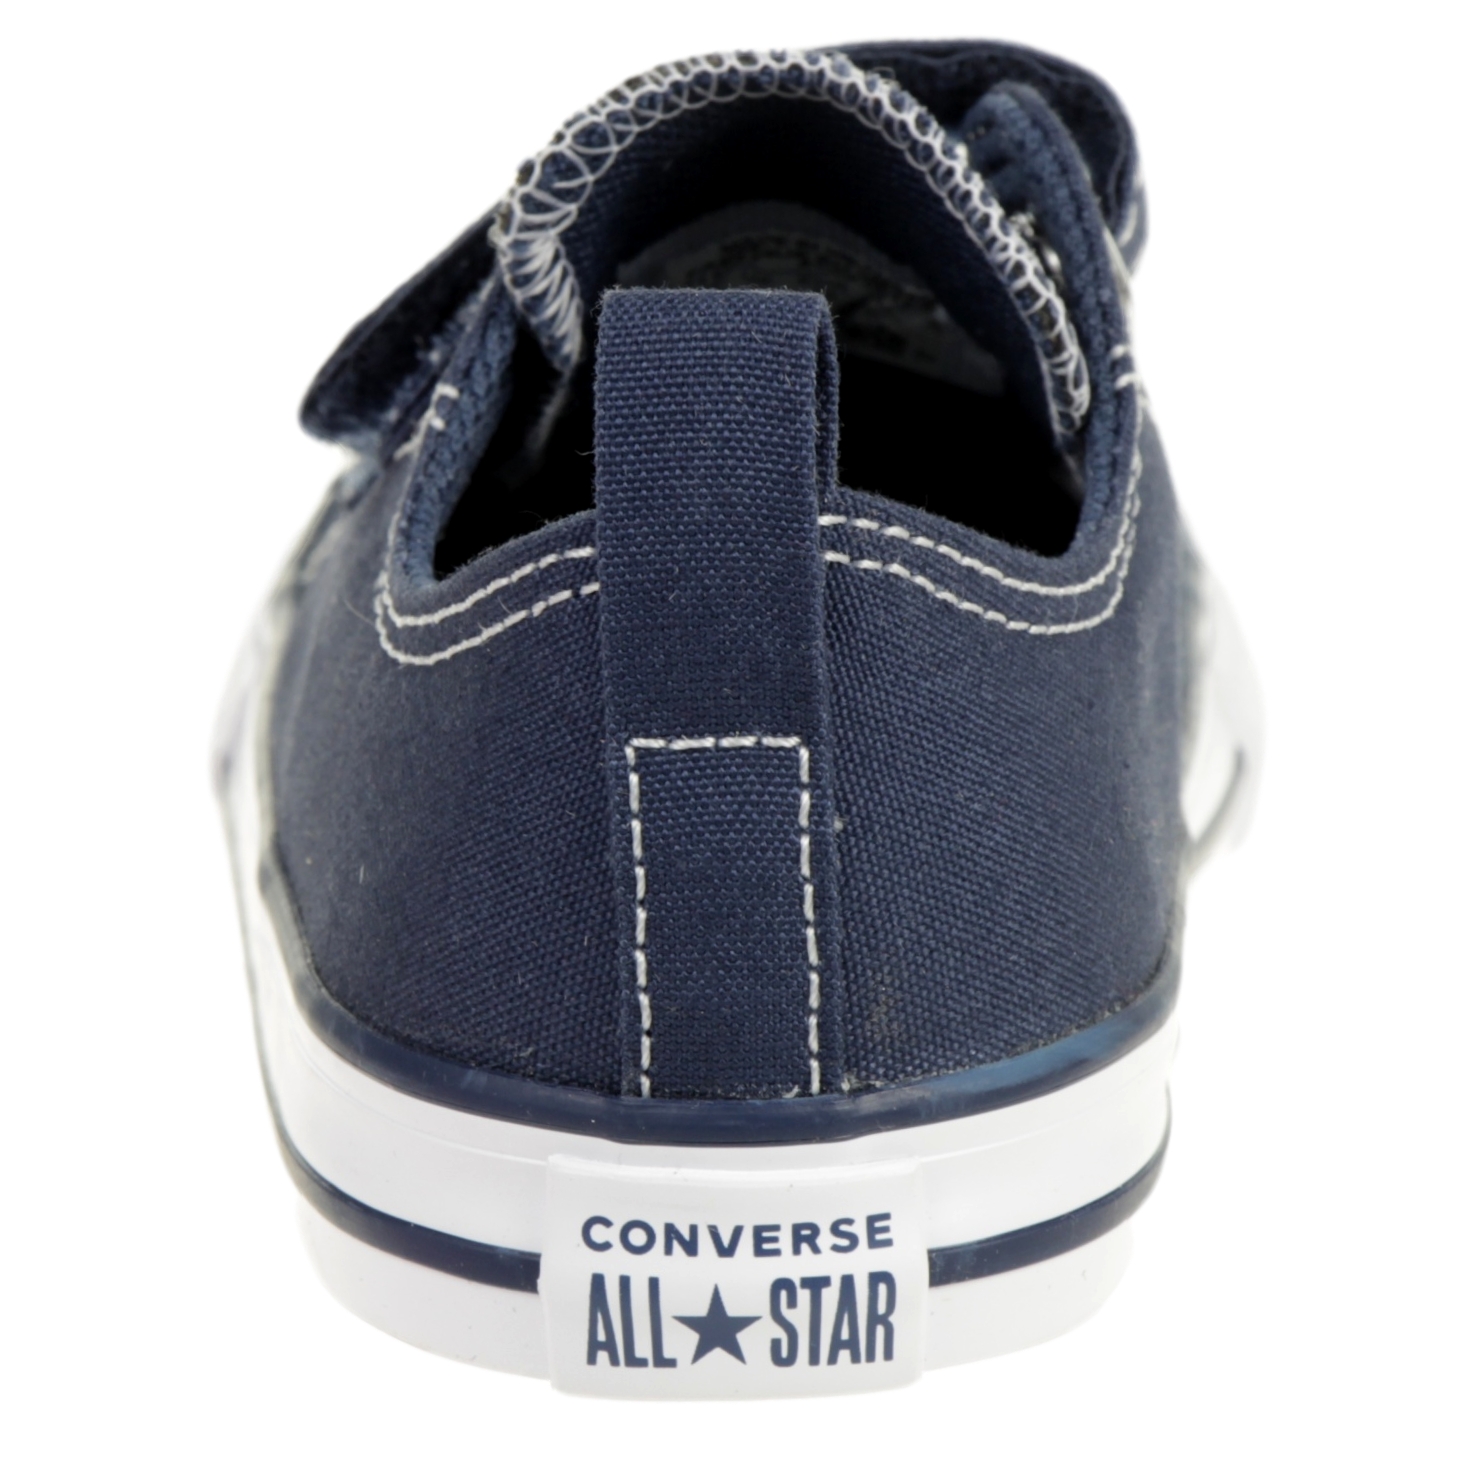 Converse CTAS 2V OX Unisex Kinder Sneaker Chucks 711357 Blau